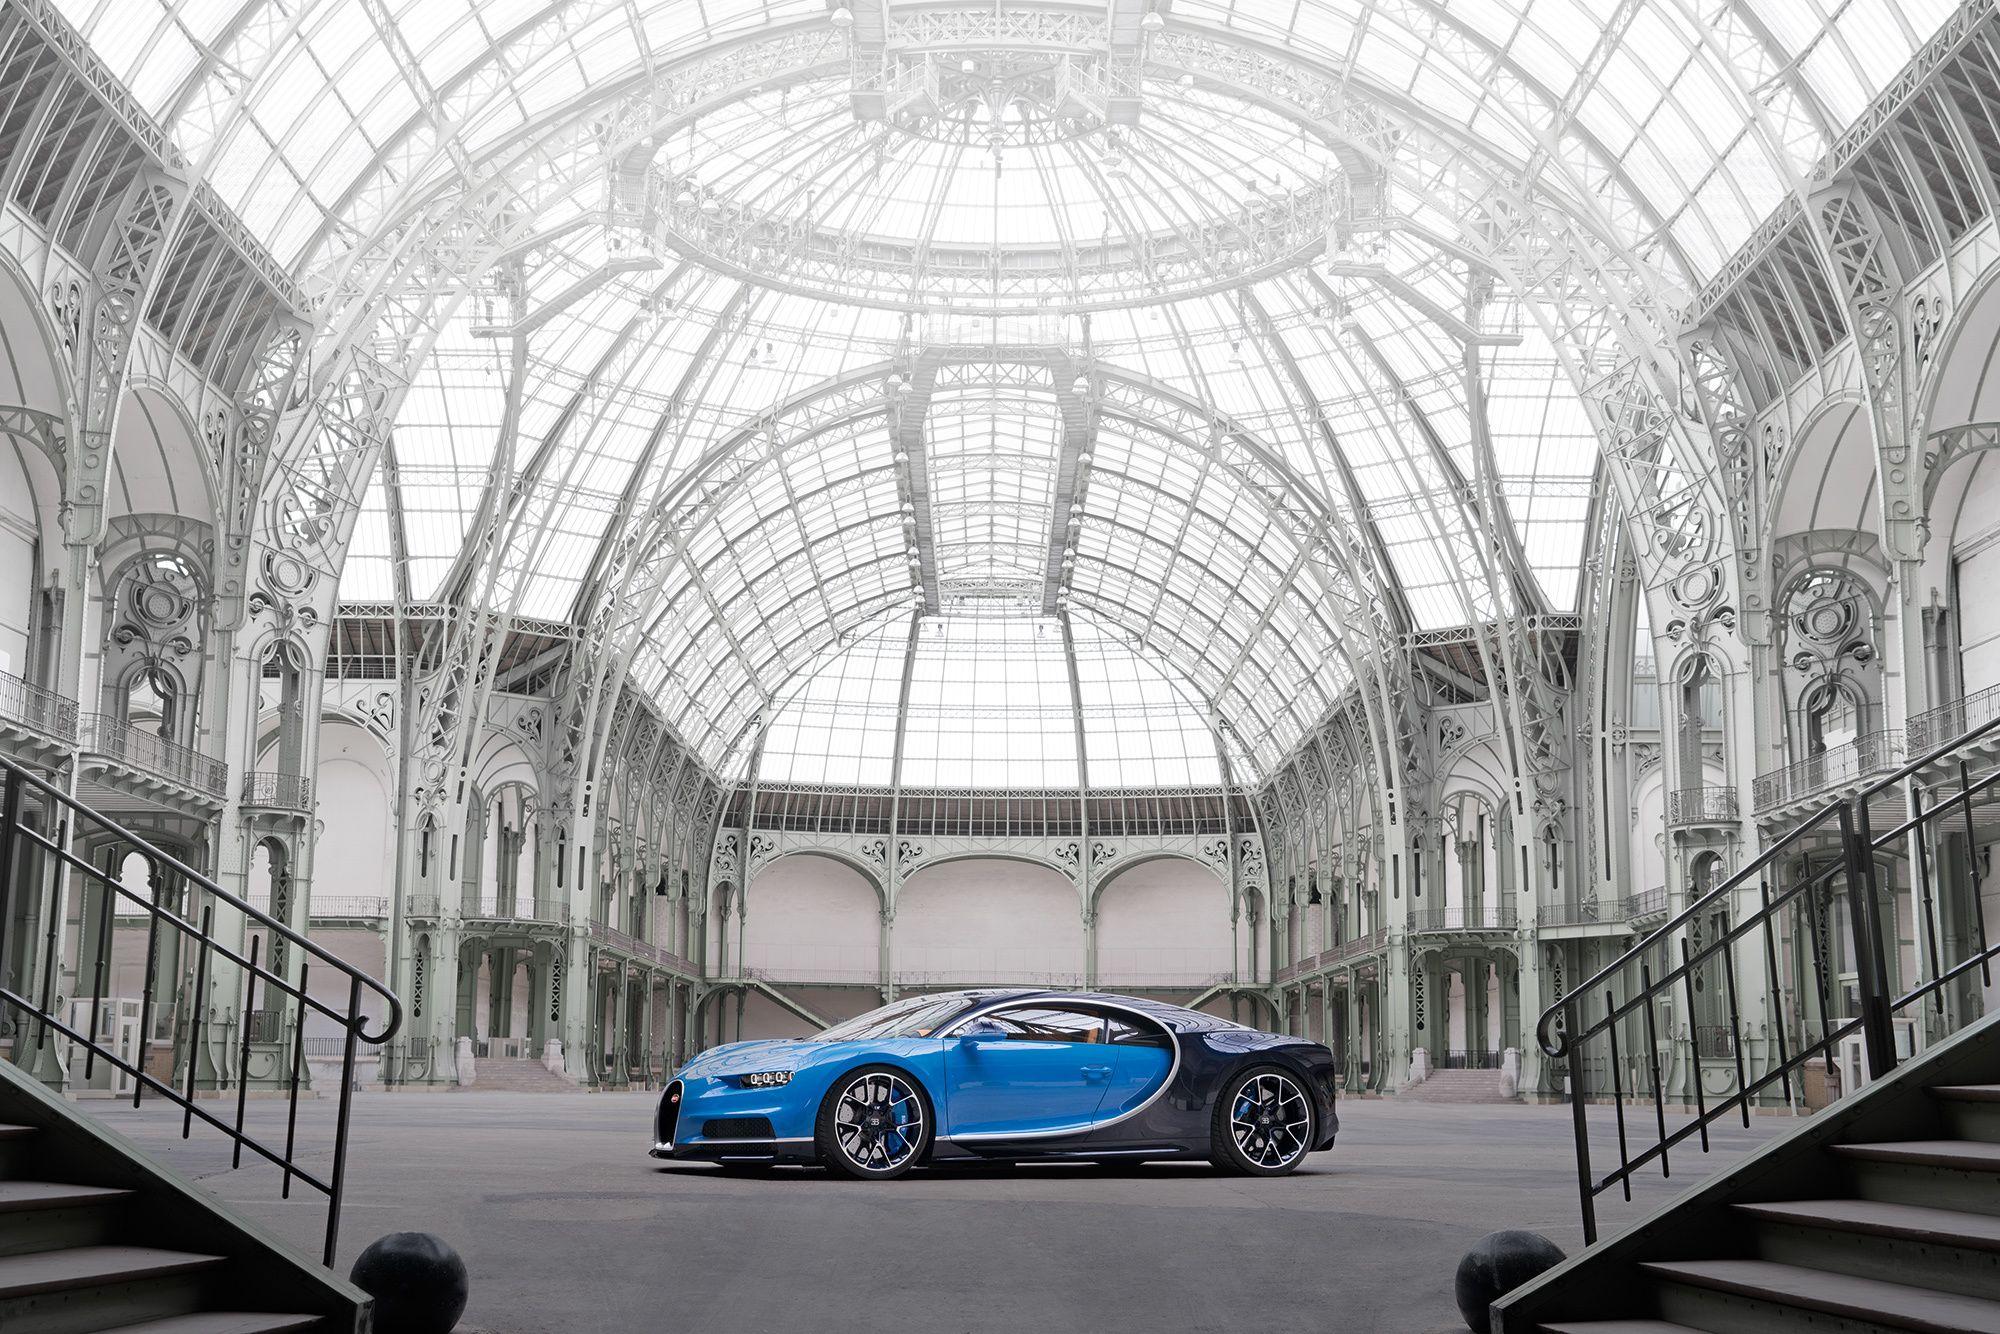 Bugatti Chiron 2017 HD wallpaper free download